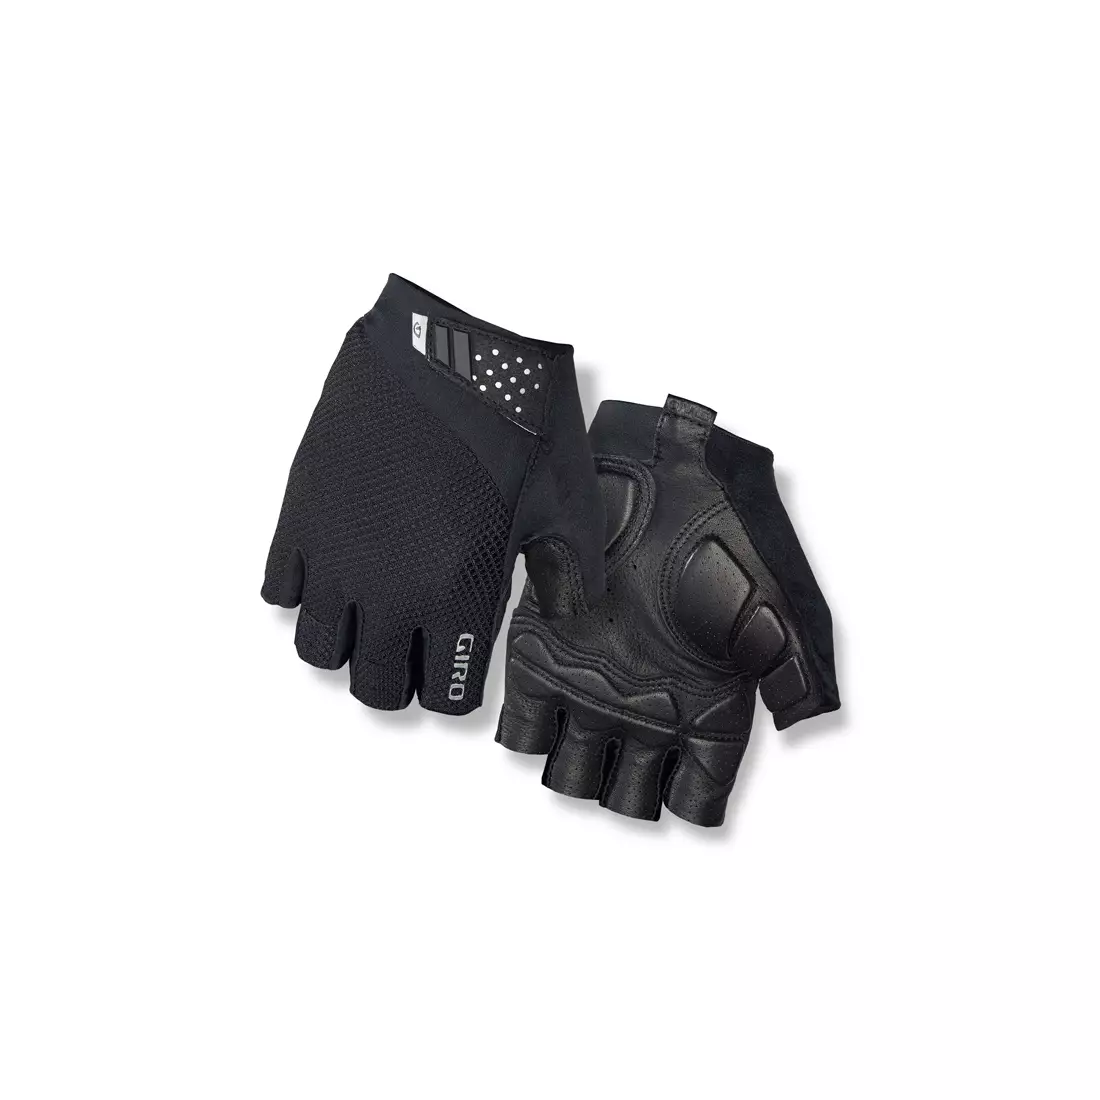 GIRO MONACO II mănuși de ciclism, negre